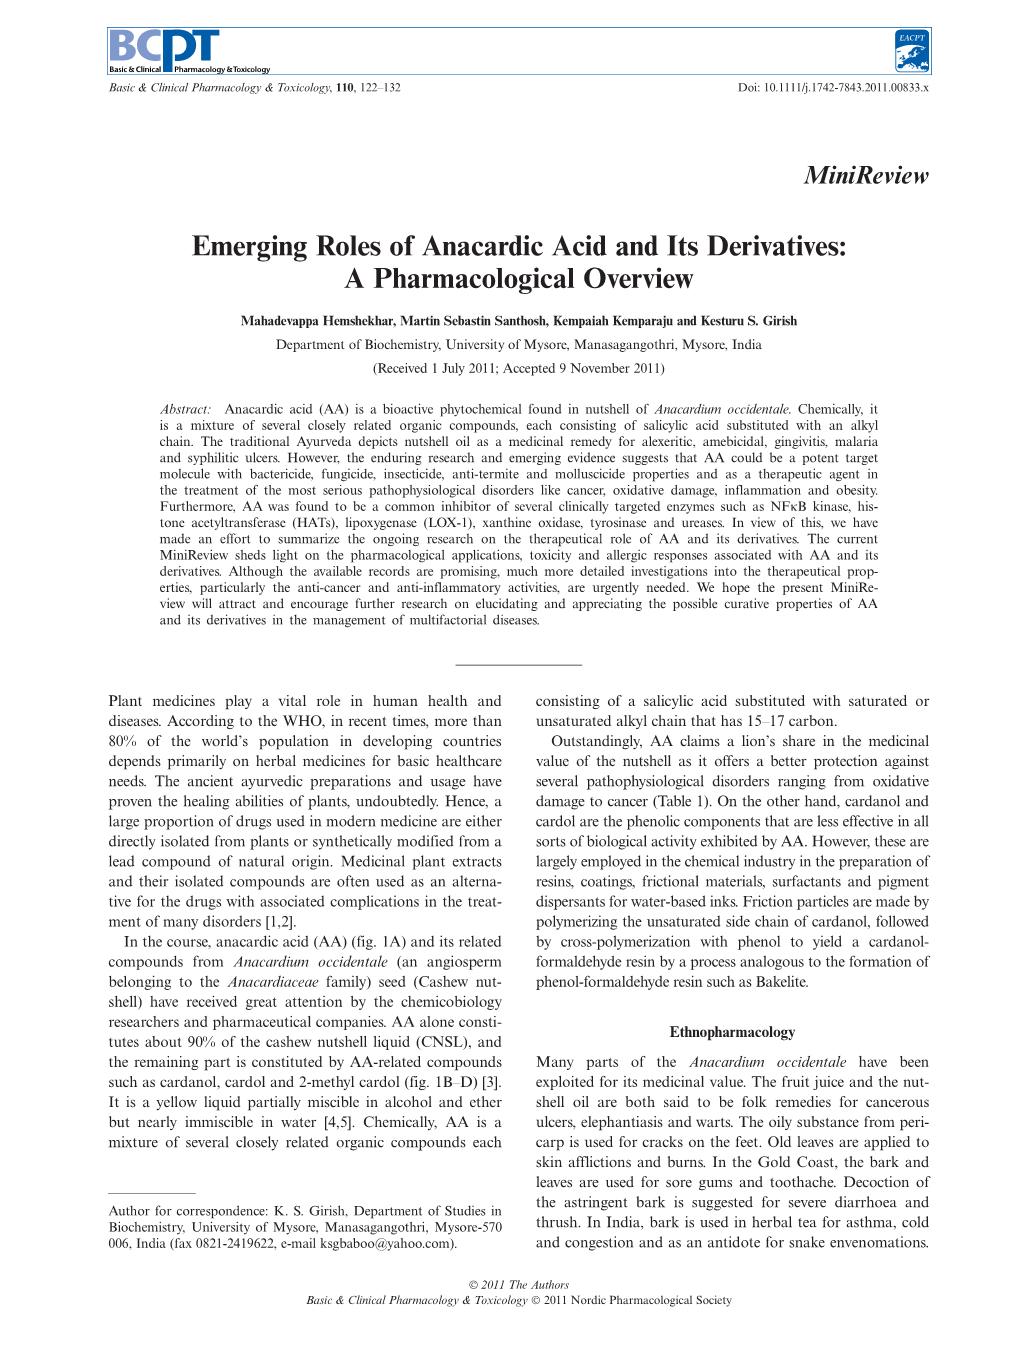 Anacardic Acid Article